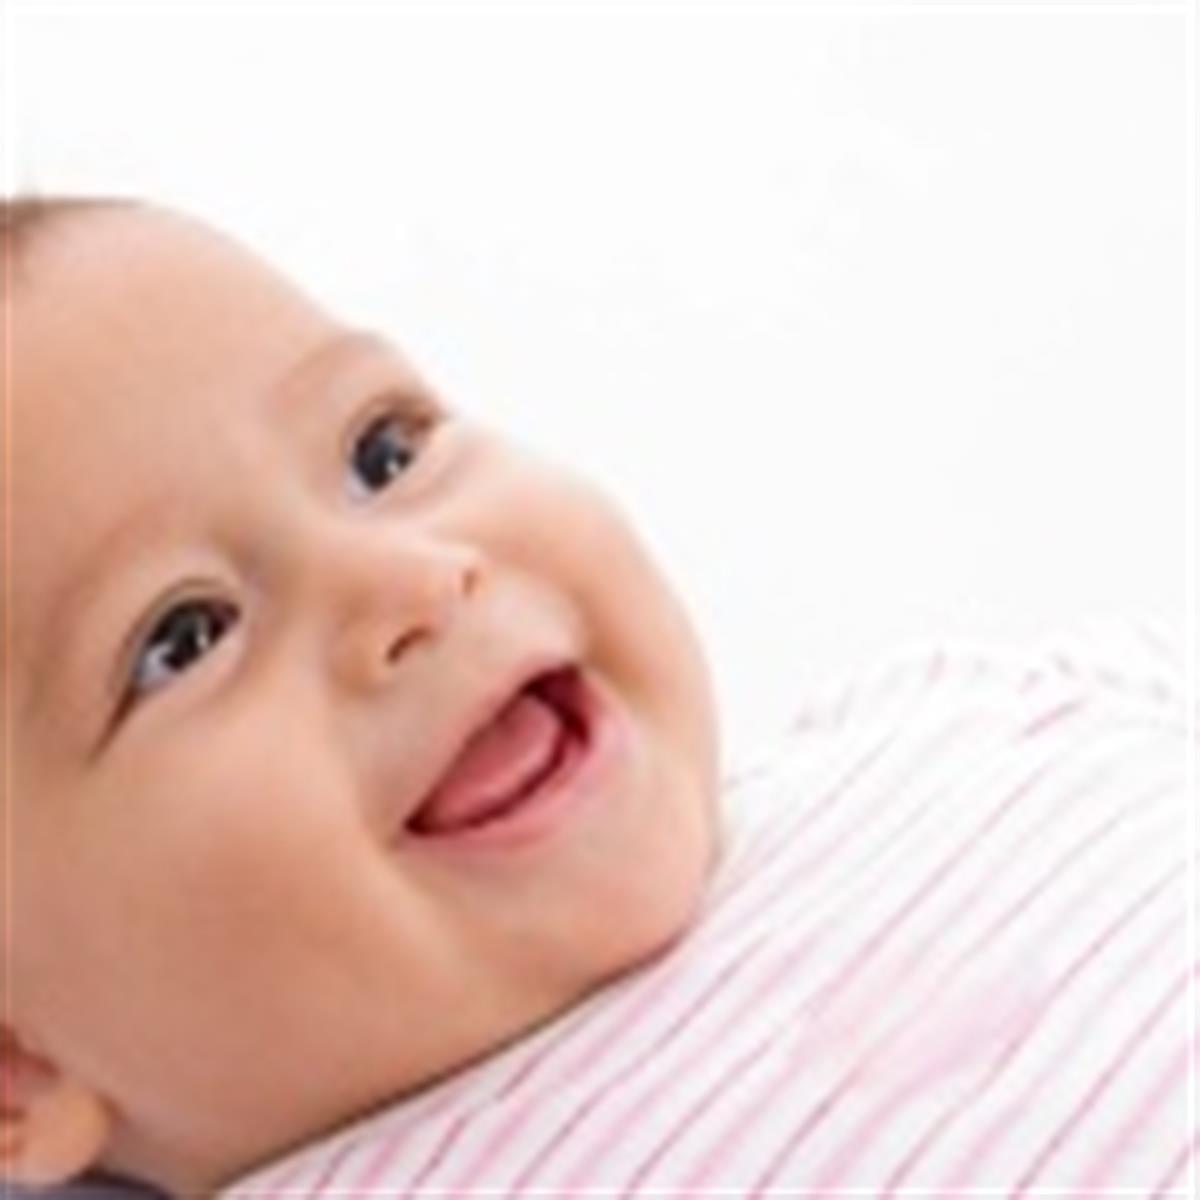 New Born Baby Development - 1 to 3 months